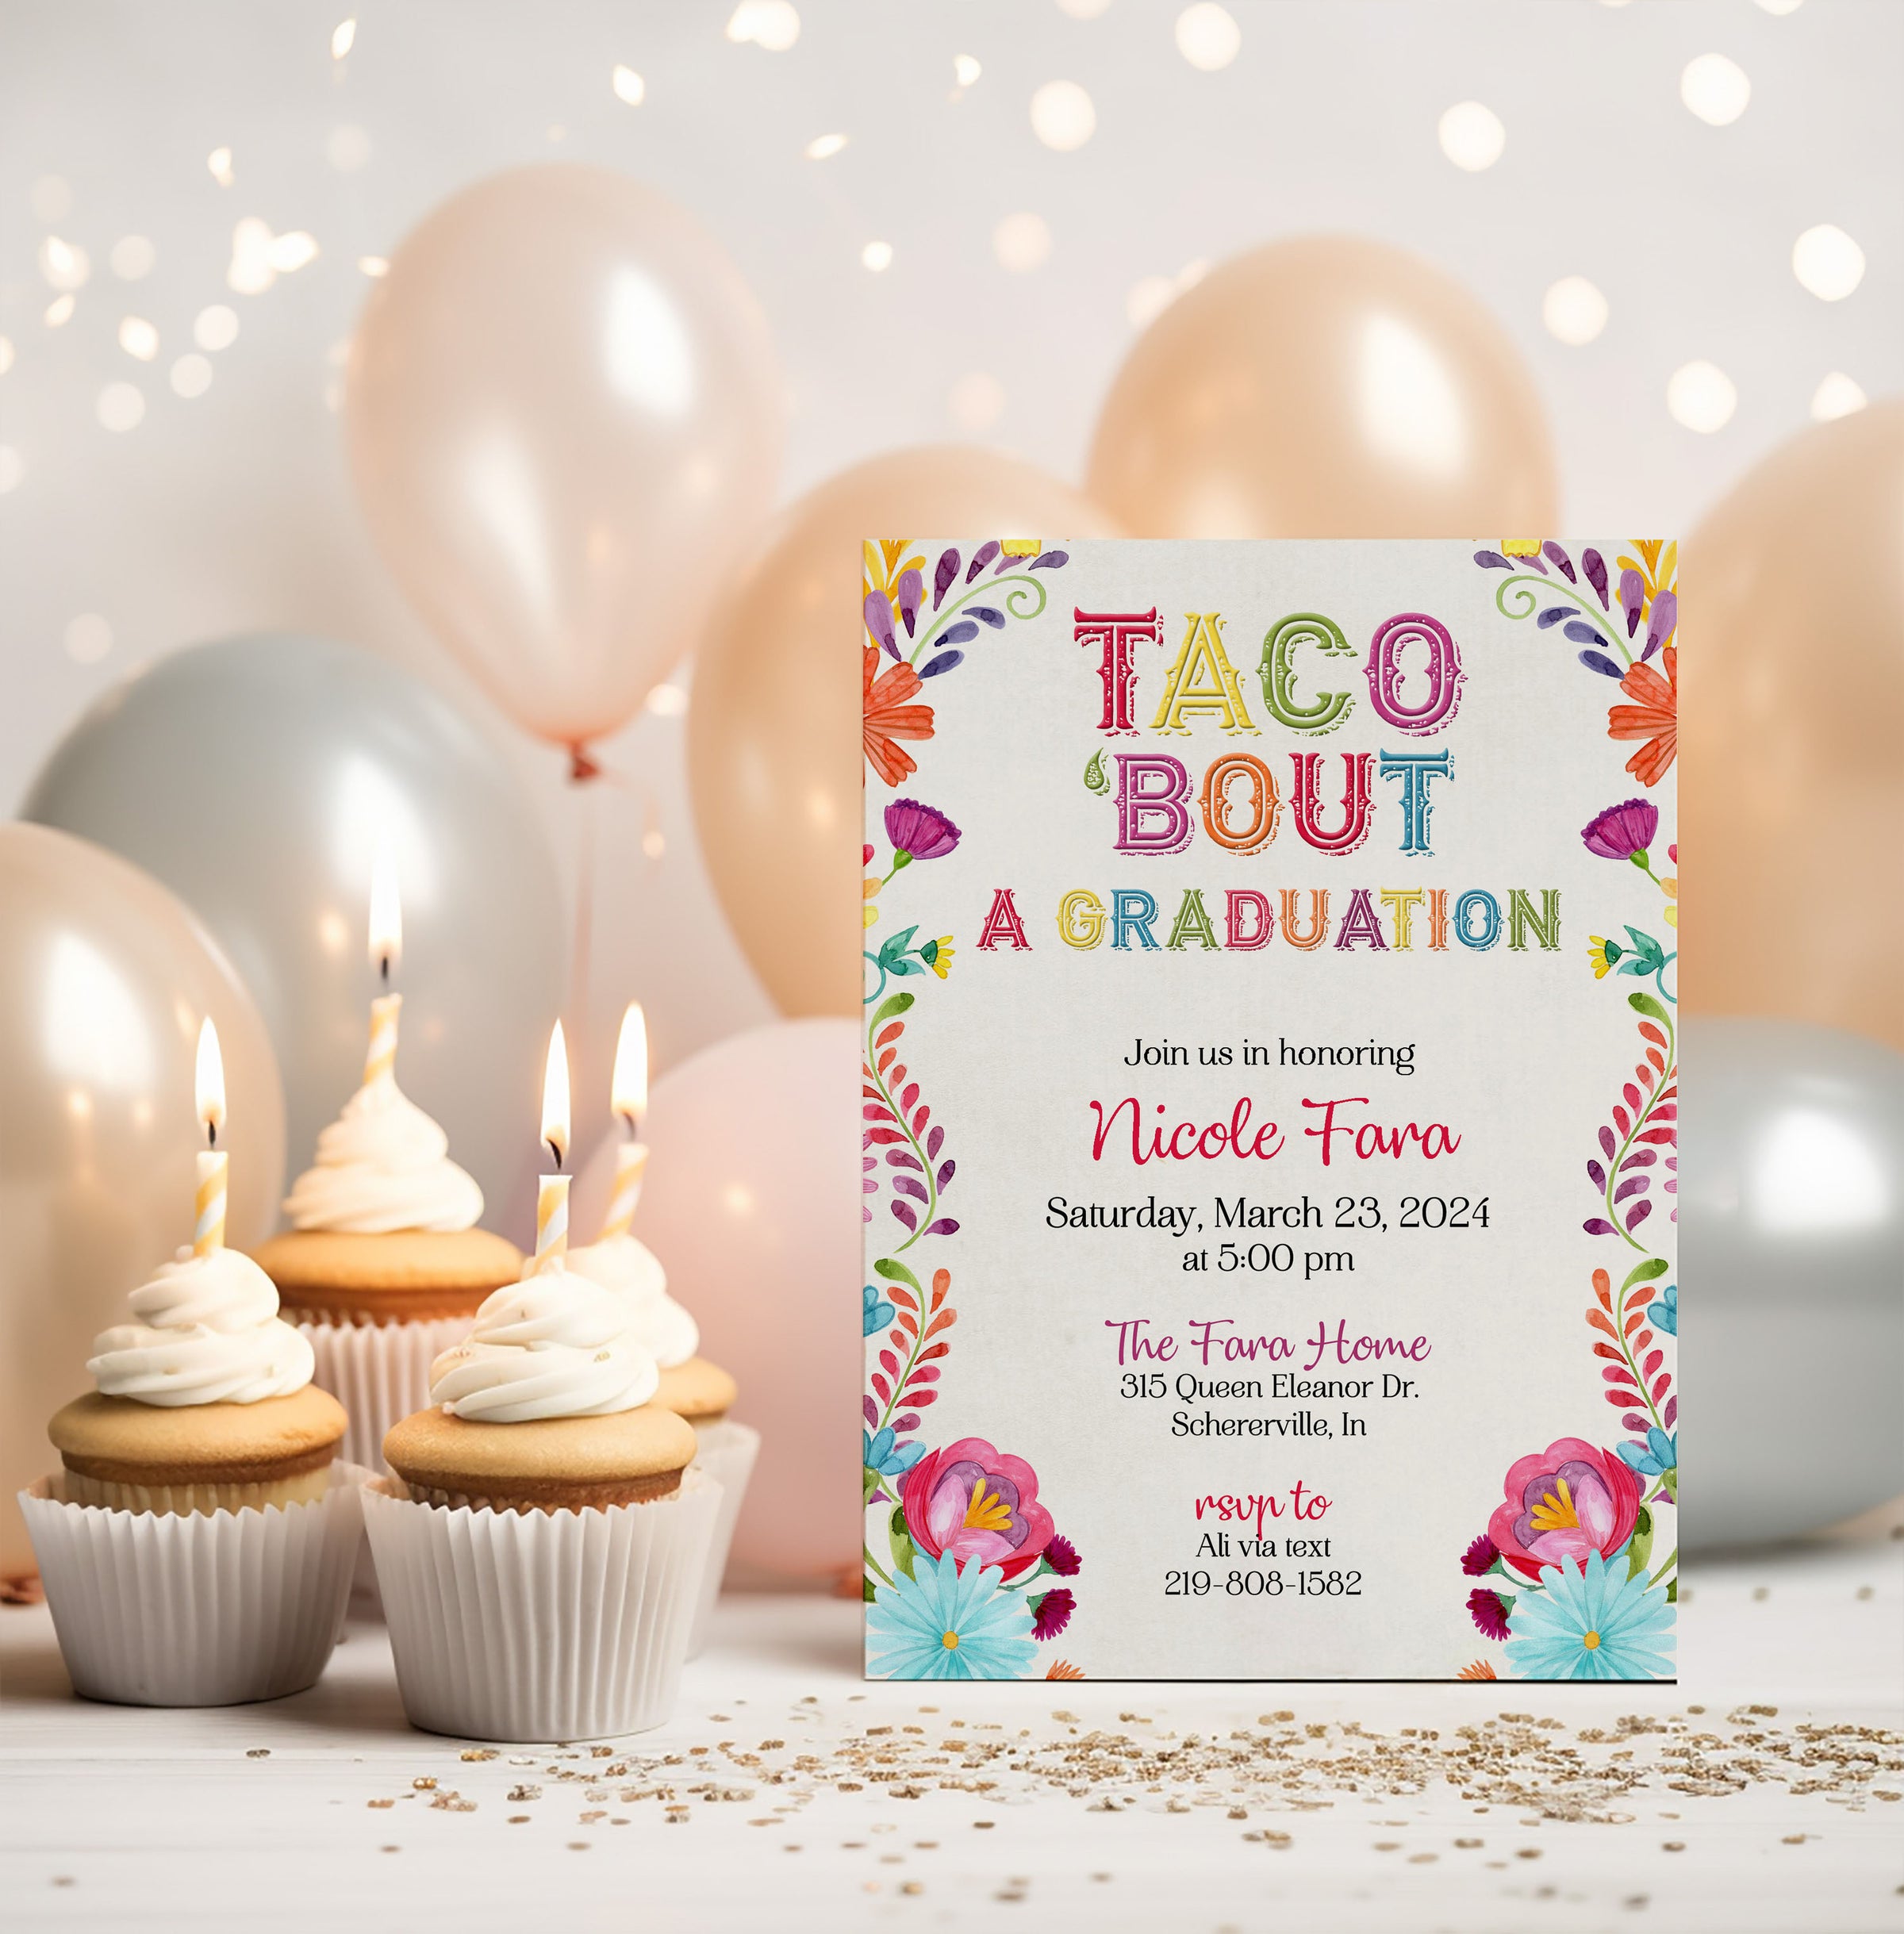 Taco'bout a Graduation Fiesta Invitation